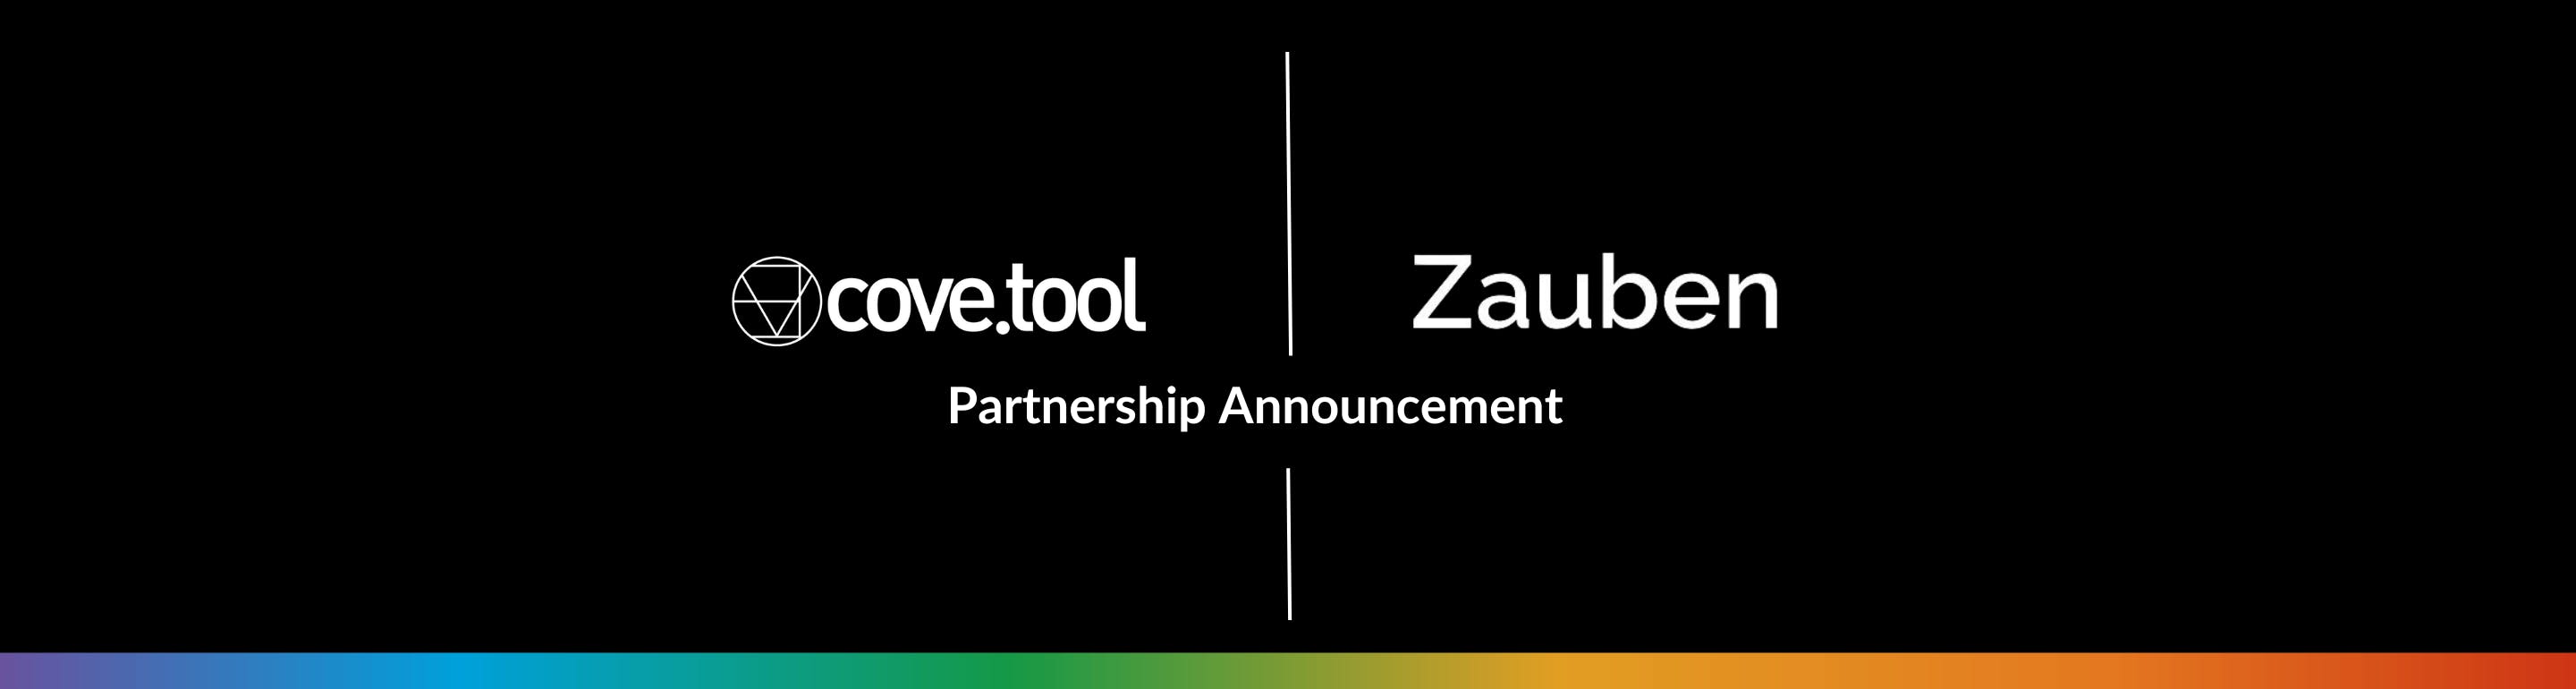 cove.tool and zauben partnership announcement 